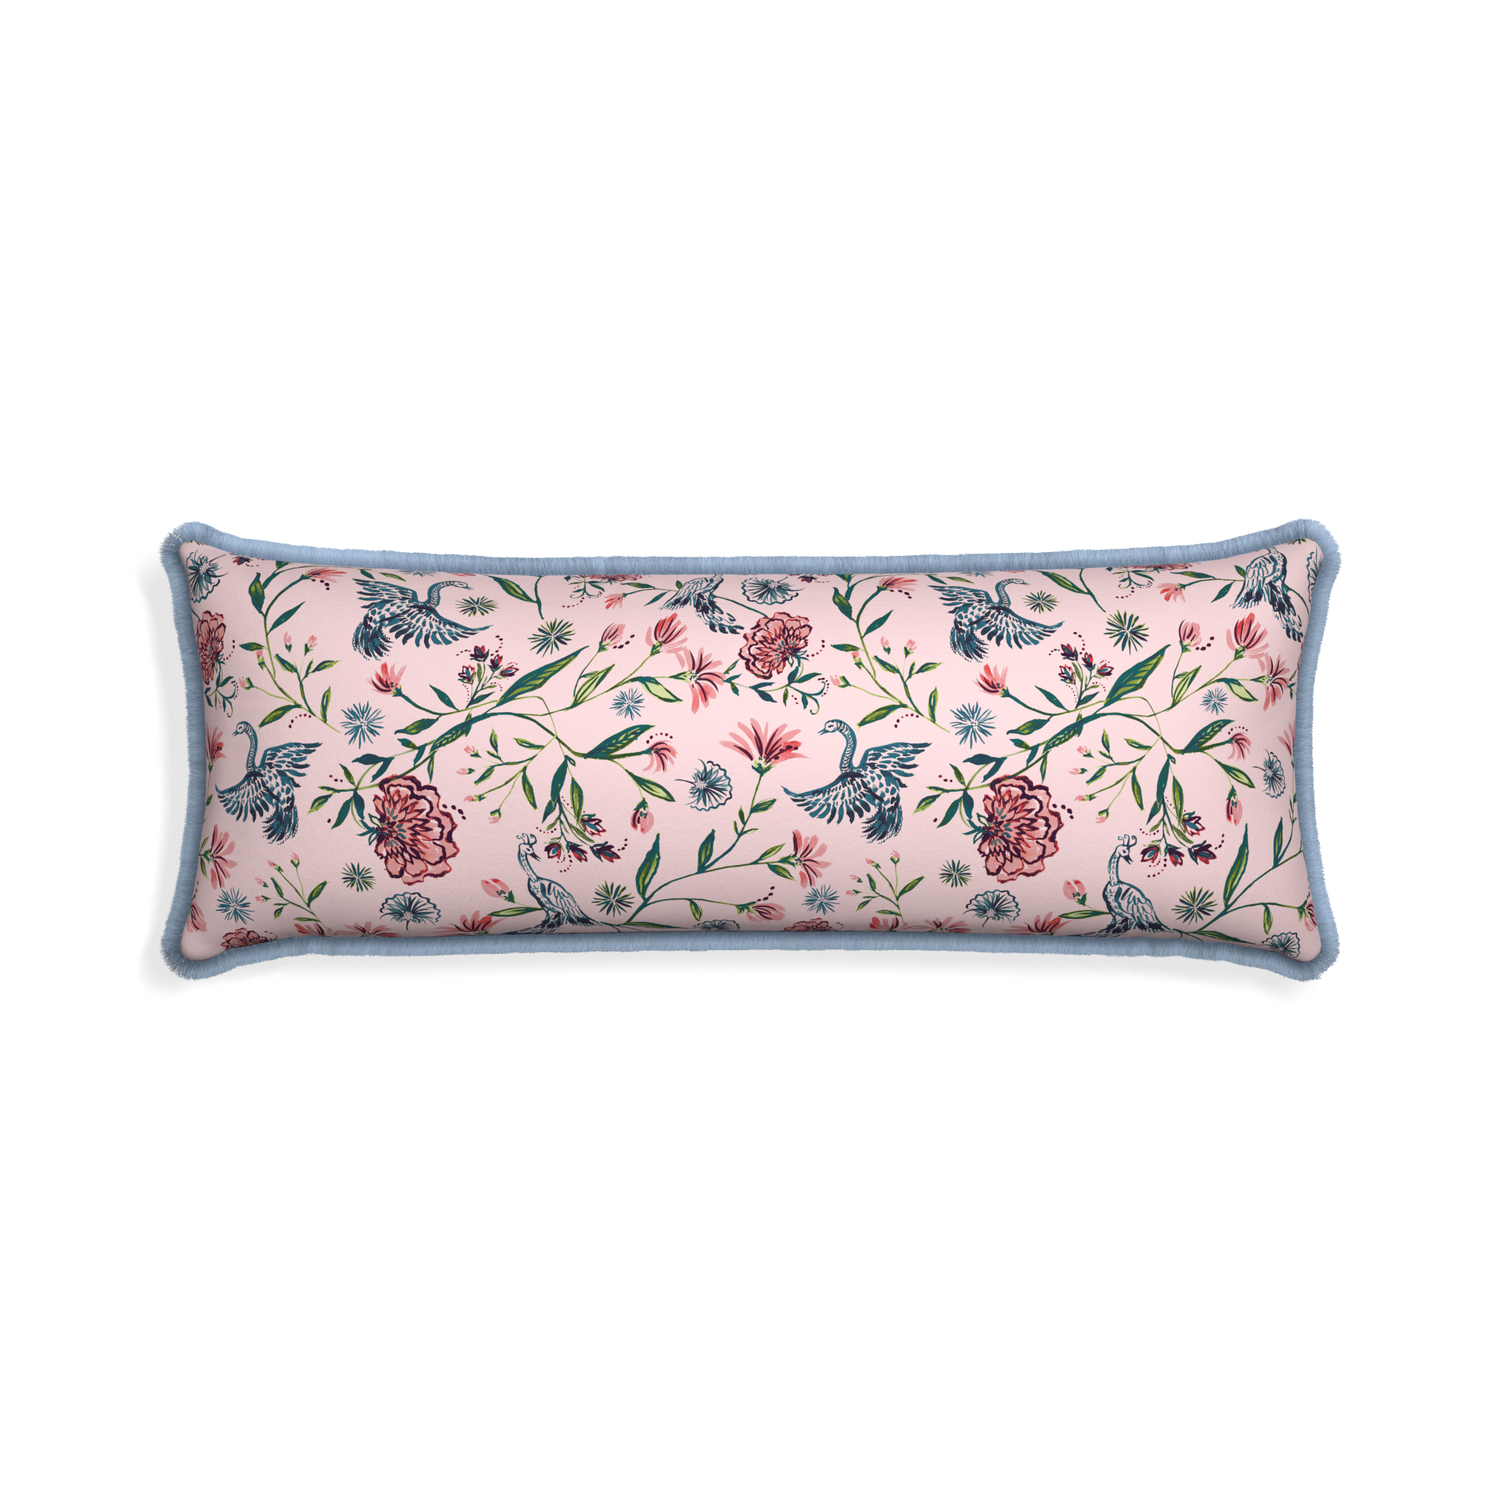 Xl-lumbar daphne rose custom pillow with sky fringe on white background